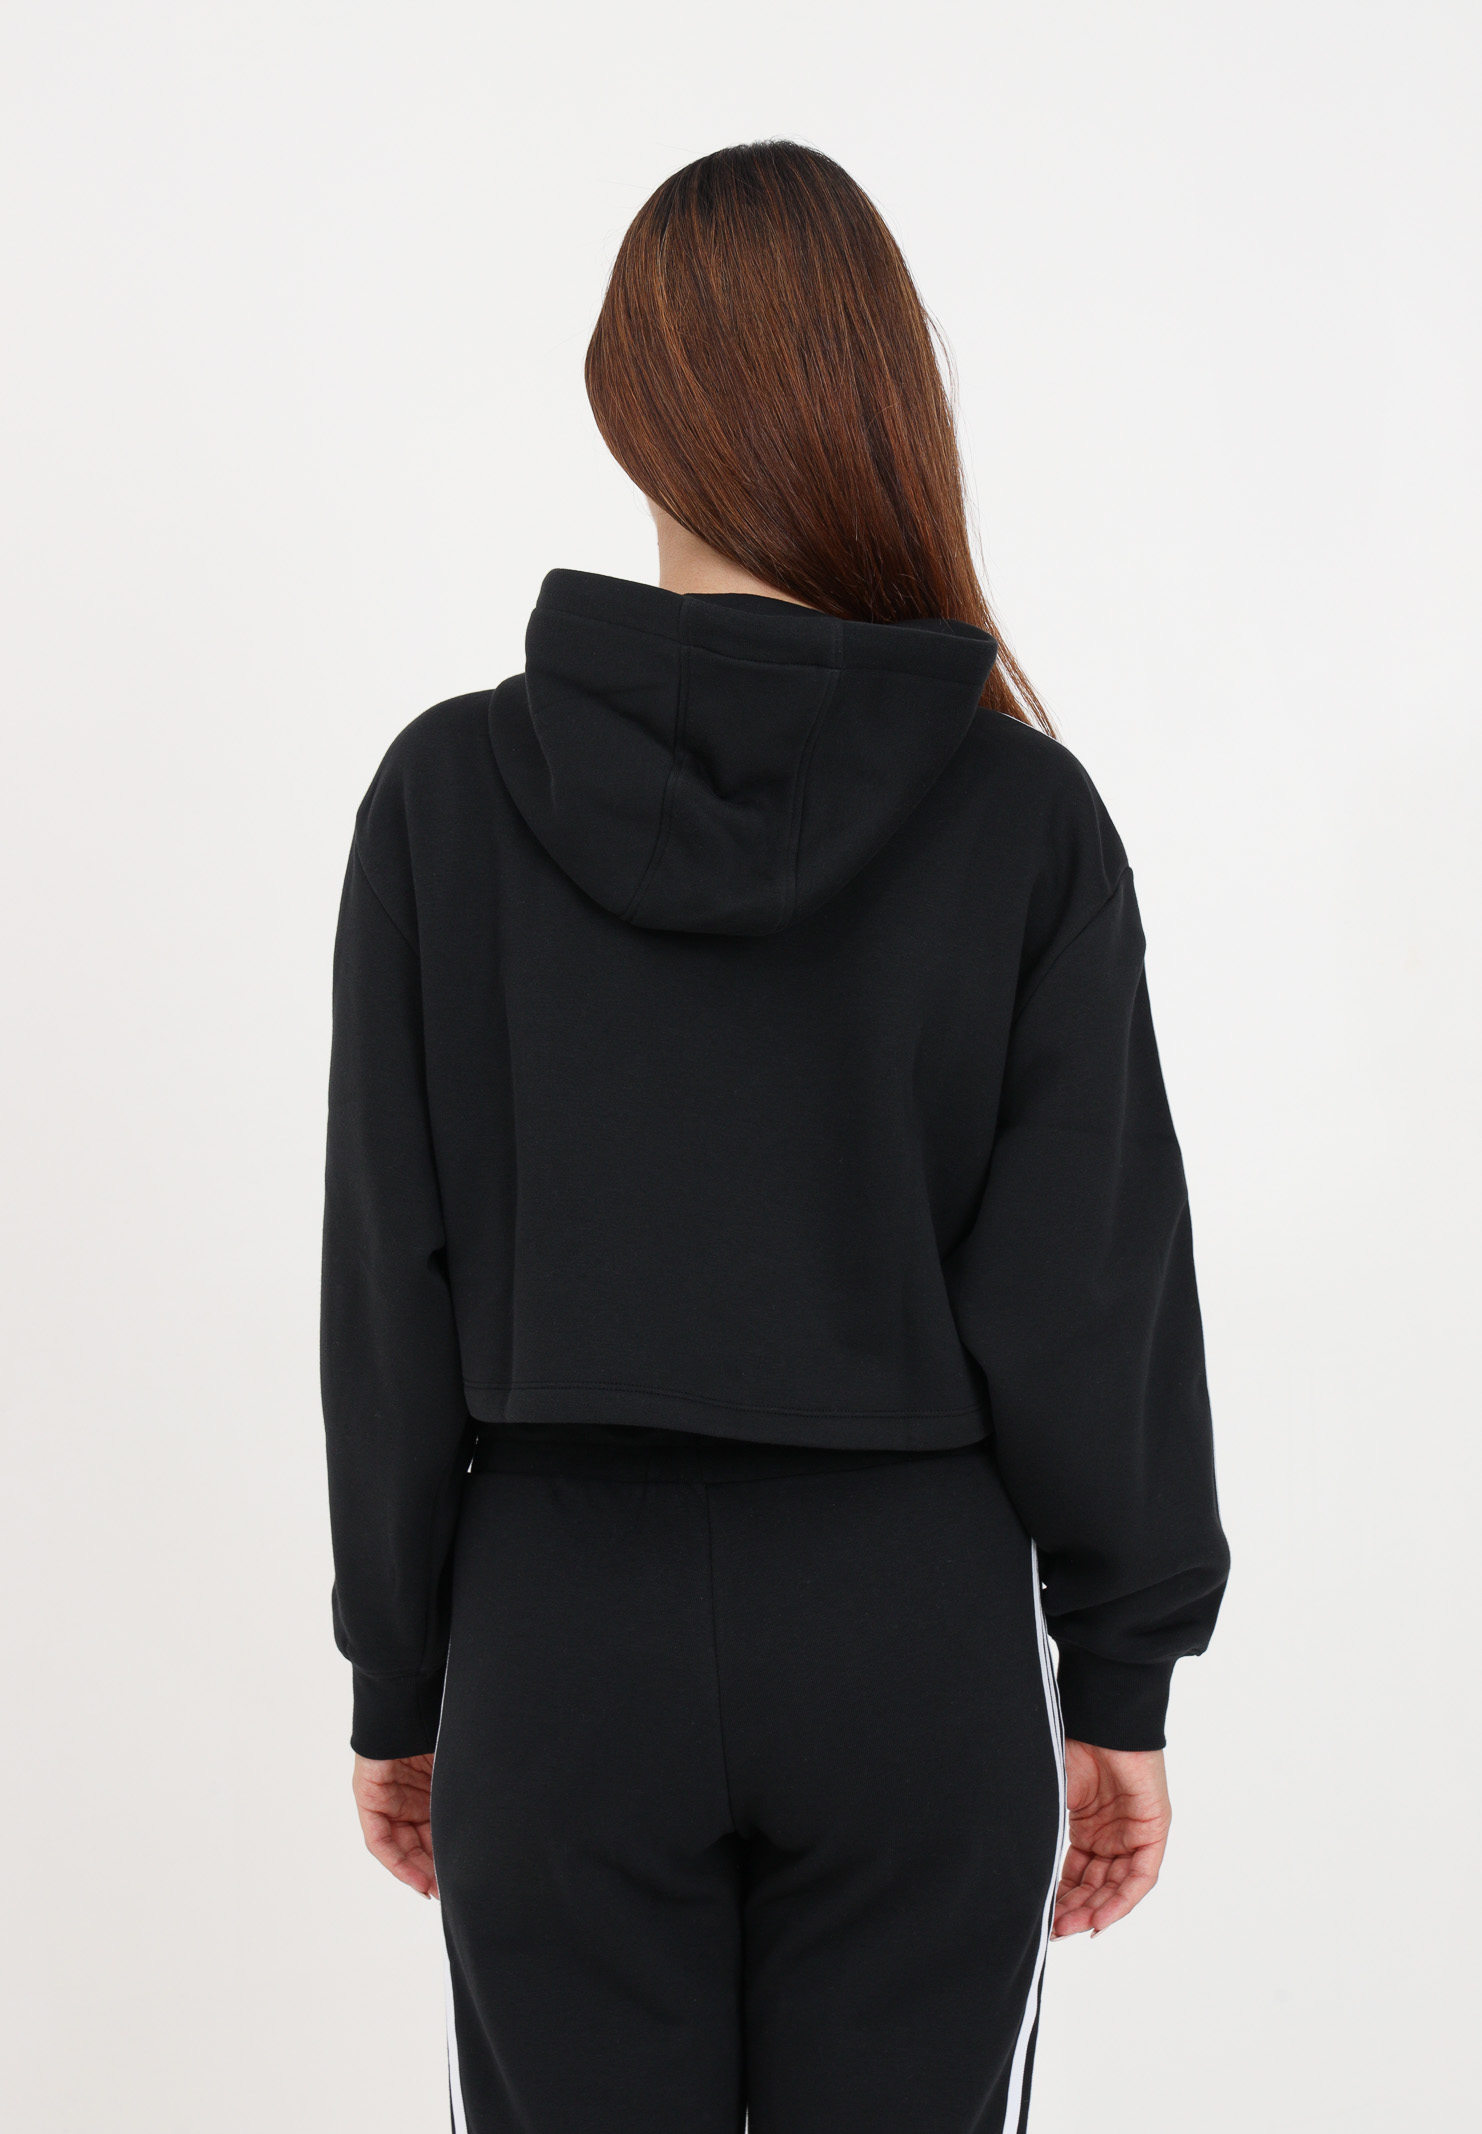 Black crop hoodie for women - ADIDAS ORIGINALS - Pavidas